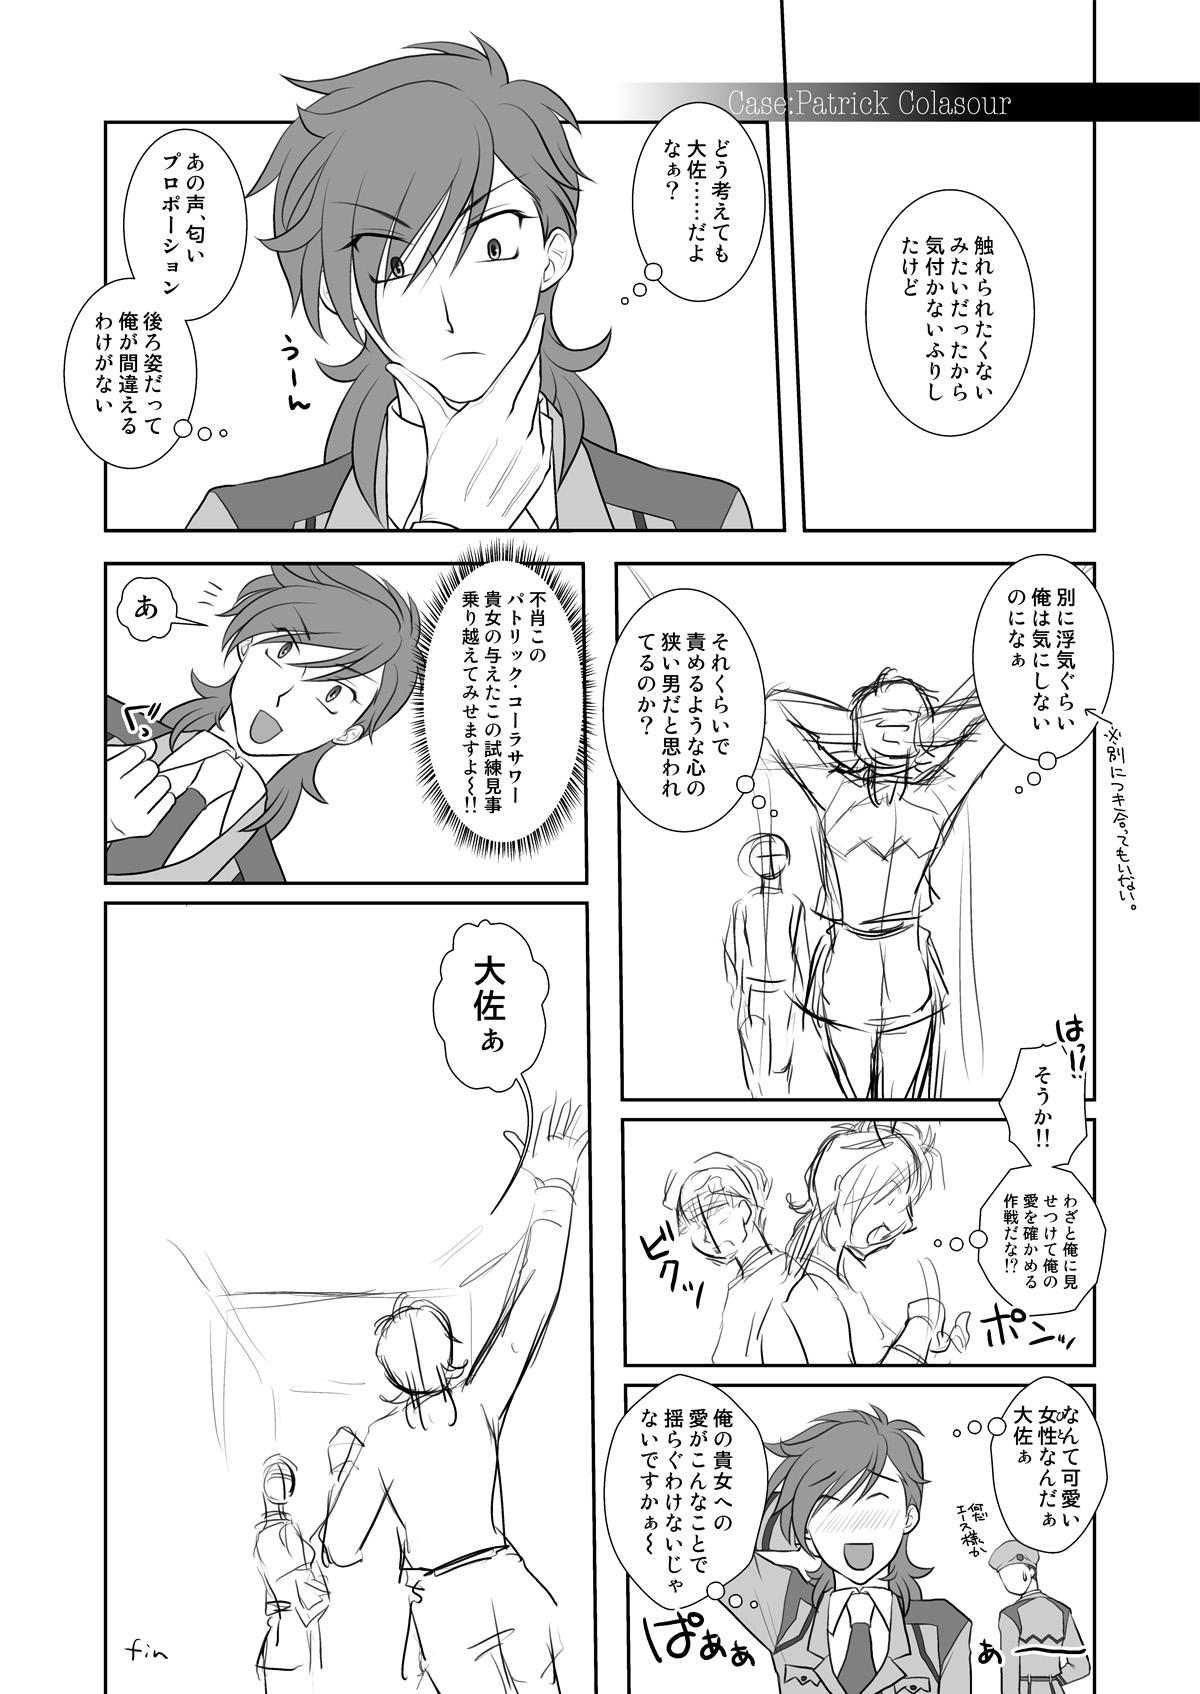 Verga Margaret - Gundam 00 Cumload - Page 19